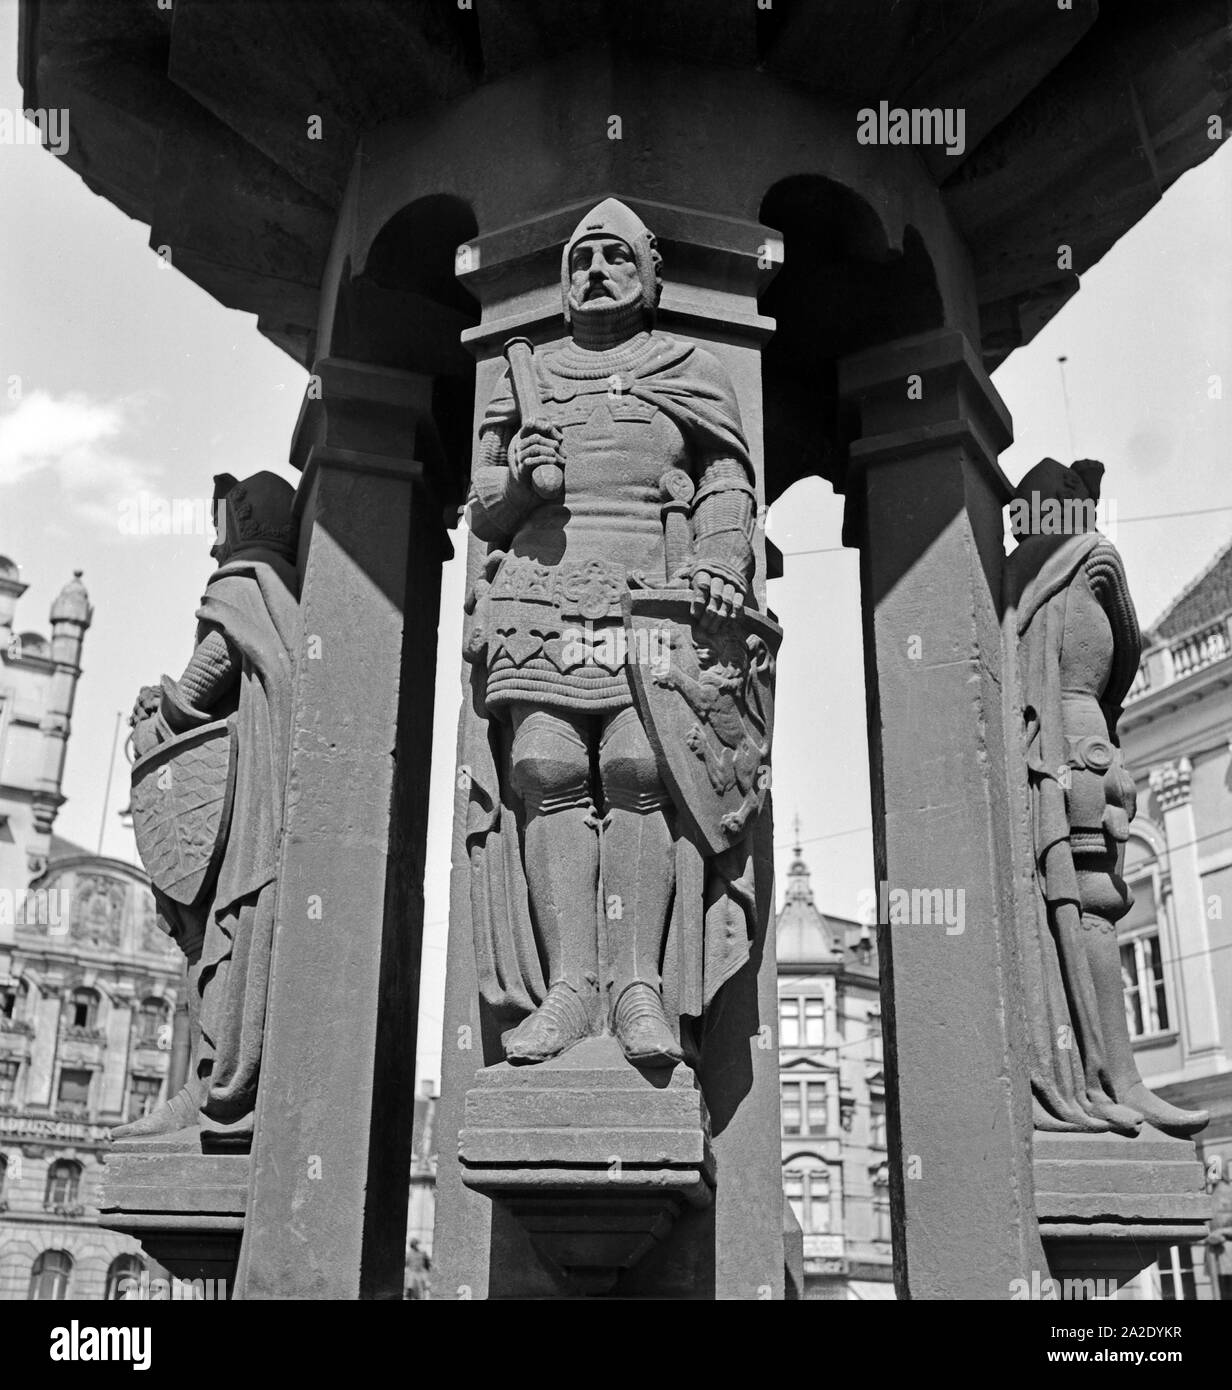 Ritter als Brunnenfiguren un einem Brunnen a Magdeburgo, Deutschland 1930er Jahre. Cavalieri come sculture di una fontana nella città vecchia di Magdeburgo, Germania 1930s. Foto Stock